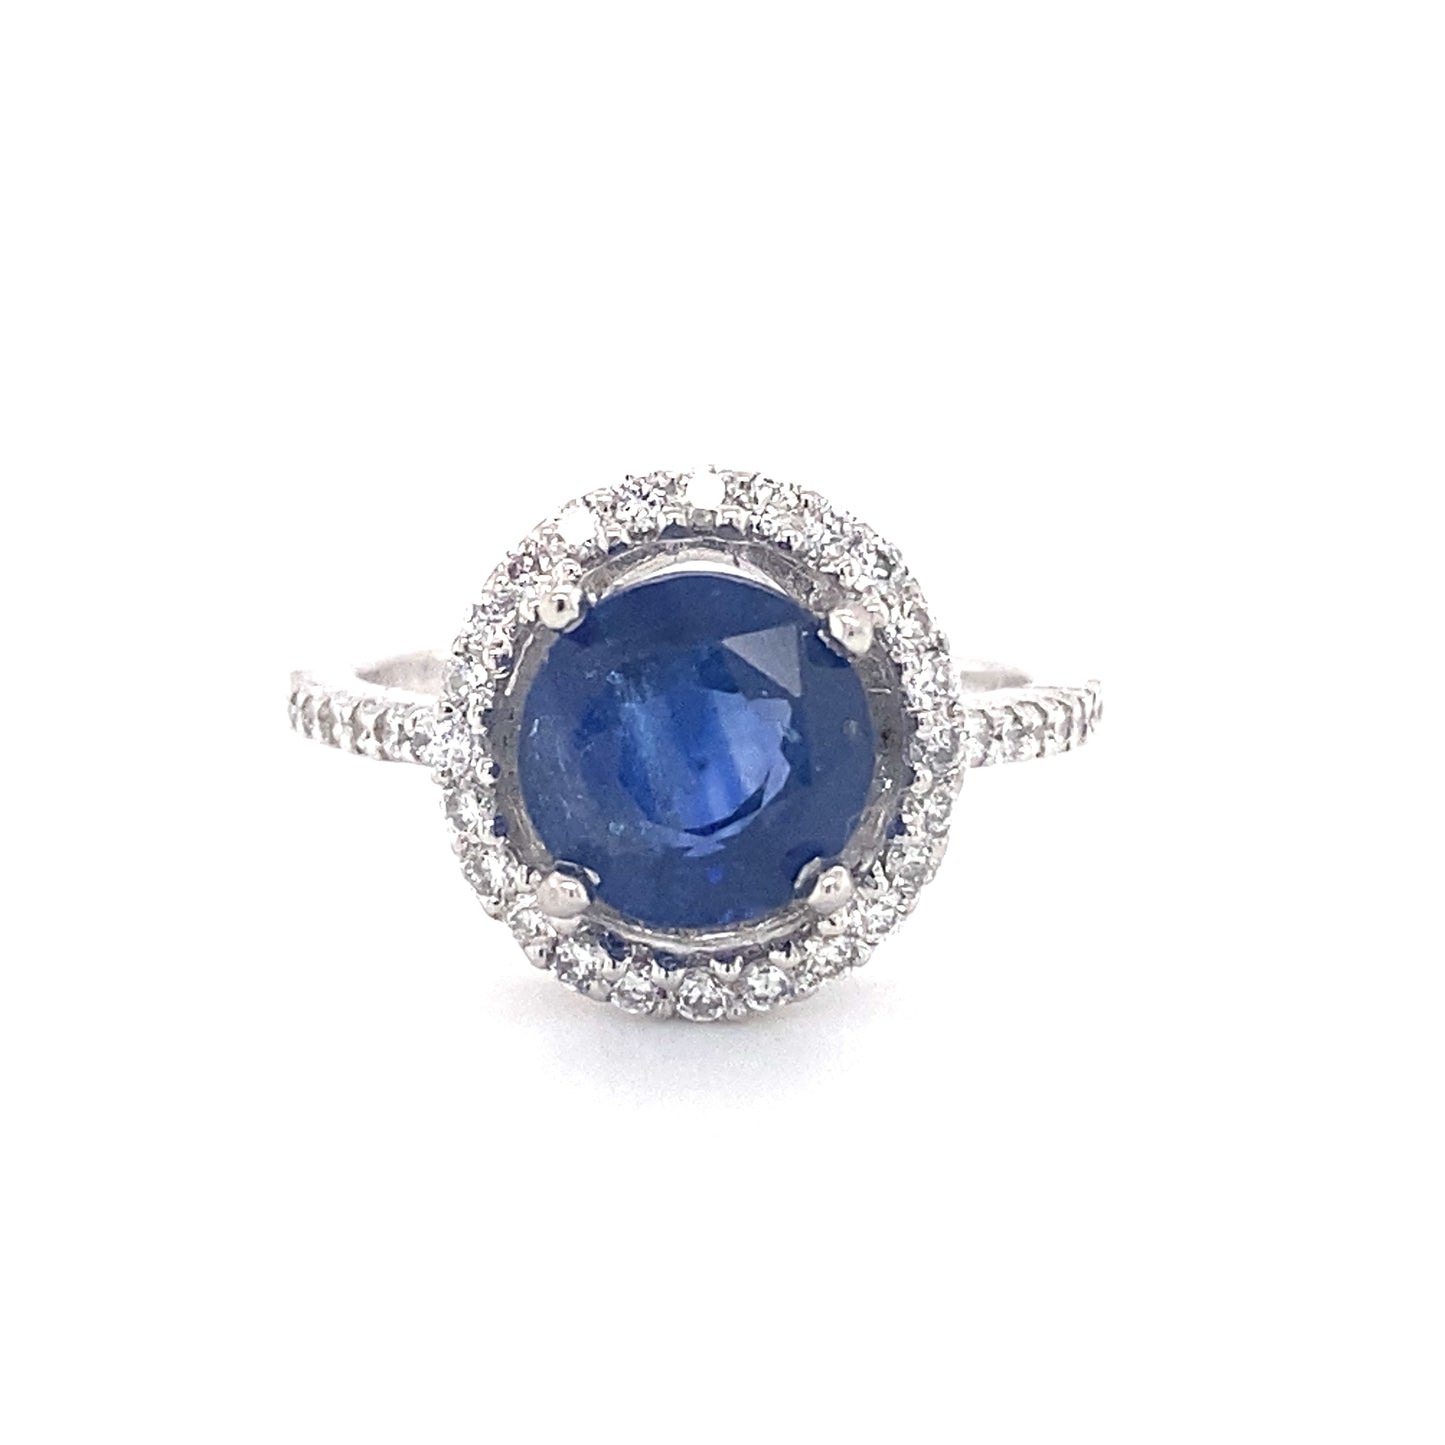 Circa 1990s 2.70ct Natural Ceylon Sapphire and Diamond Ring in Platinum